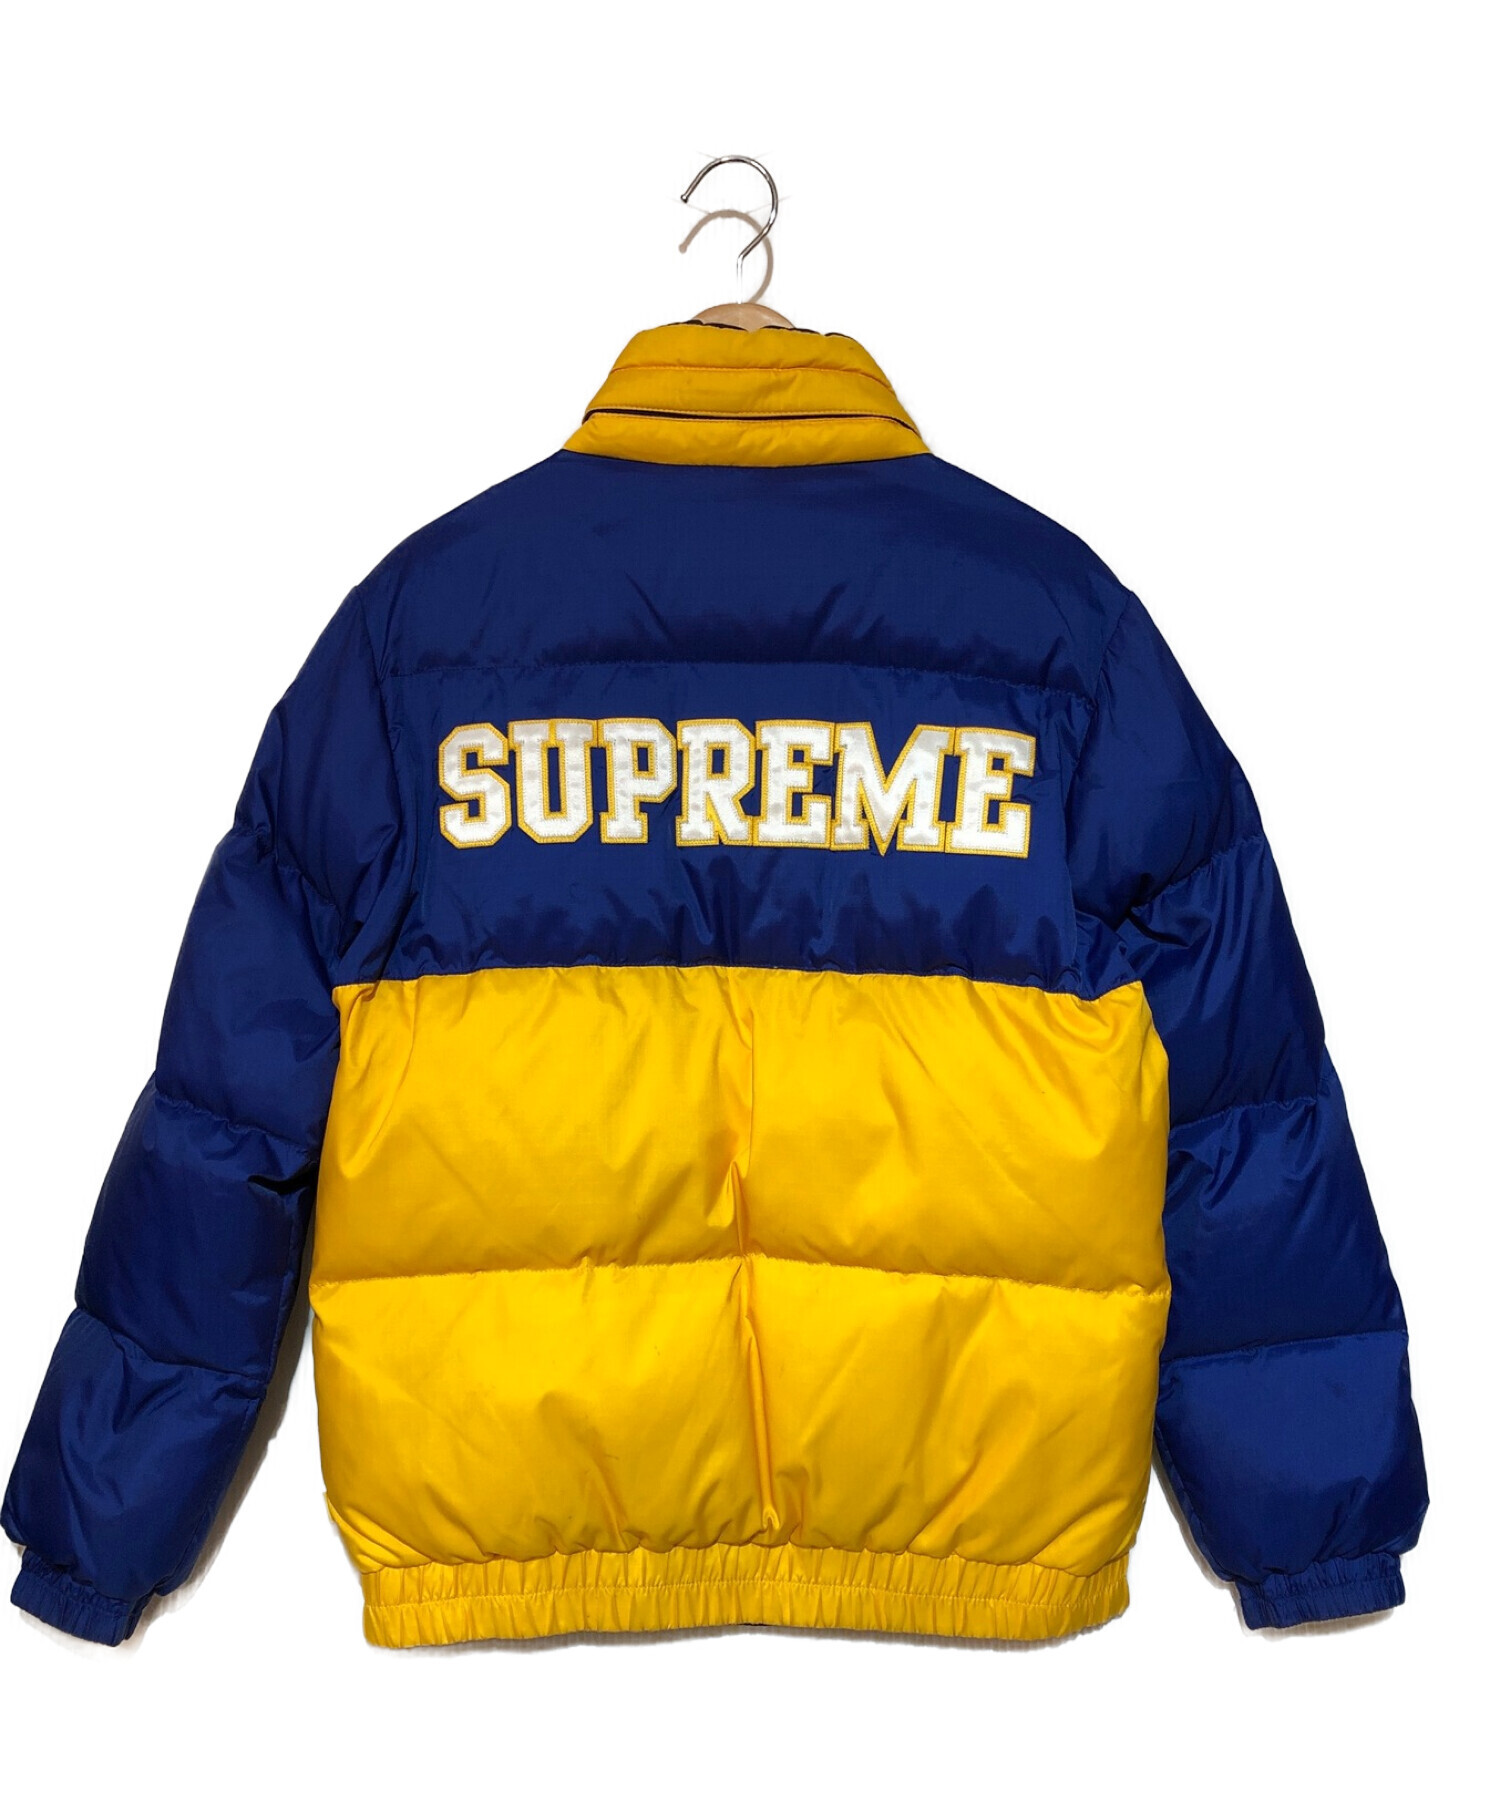 SUPREME (シュプリーム) Reversible Puffy Jacket　ダウンジャケット ブルー×イエロー サイズ:S